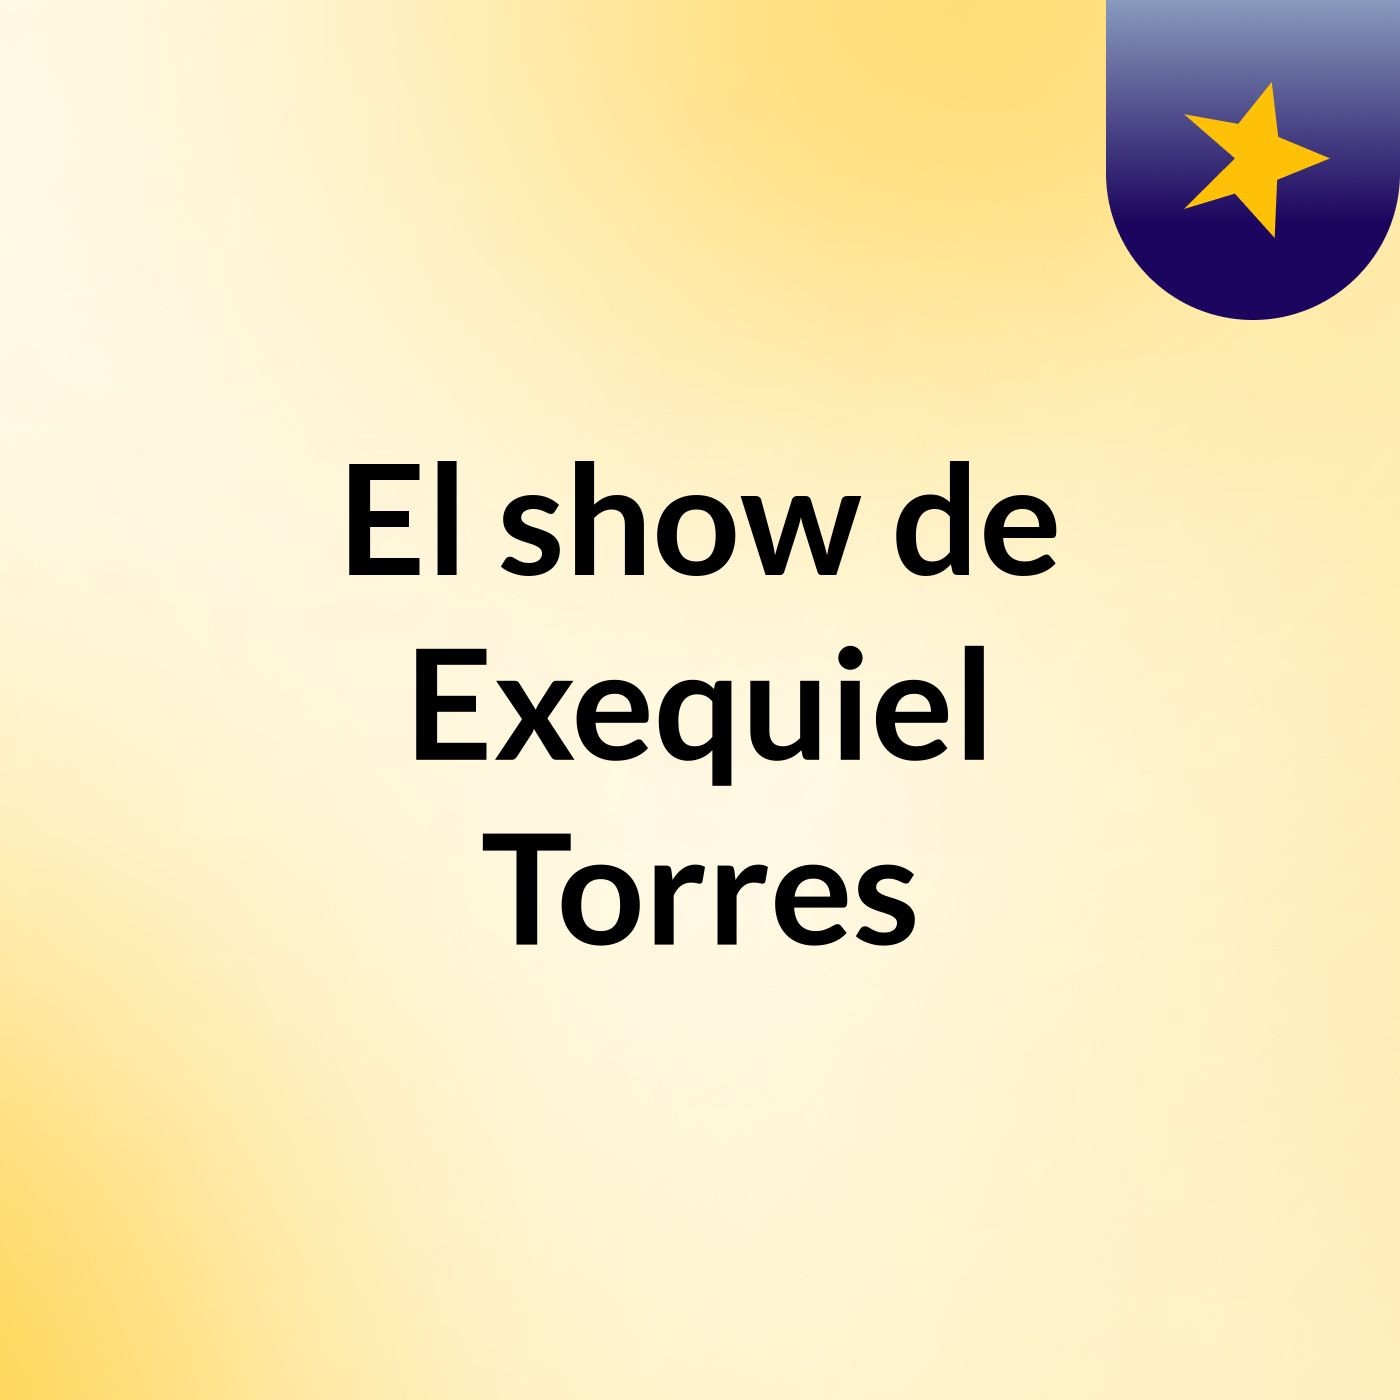 El show de Exequiel Torres